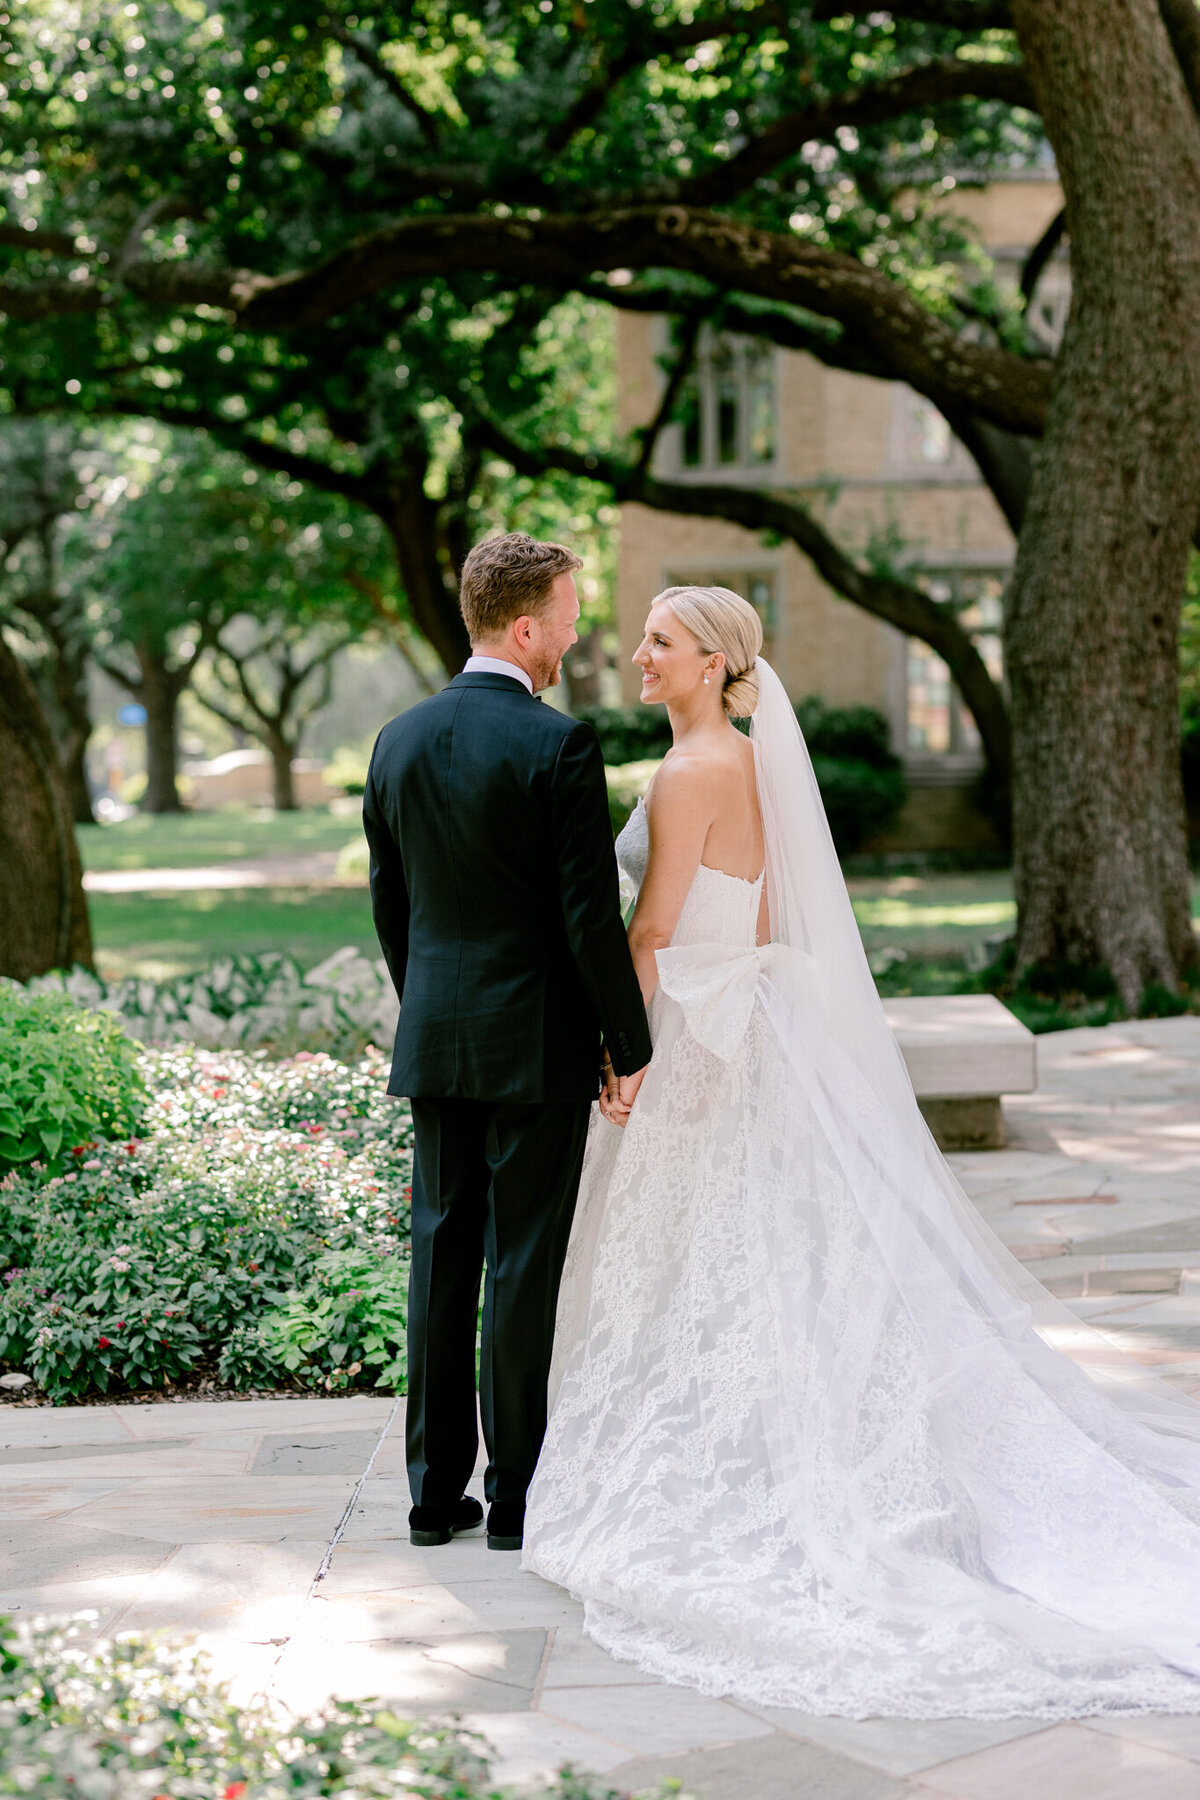 Katelyn & Kyle's Wedding at the Adolphus Hotel | Dallas Wedding Photographer | Sami Kathryn Photography-199